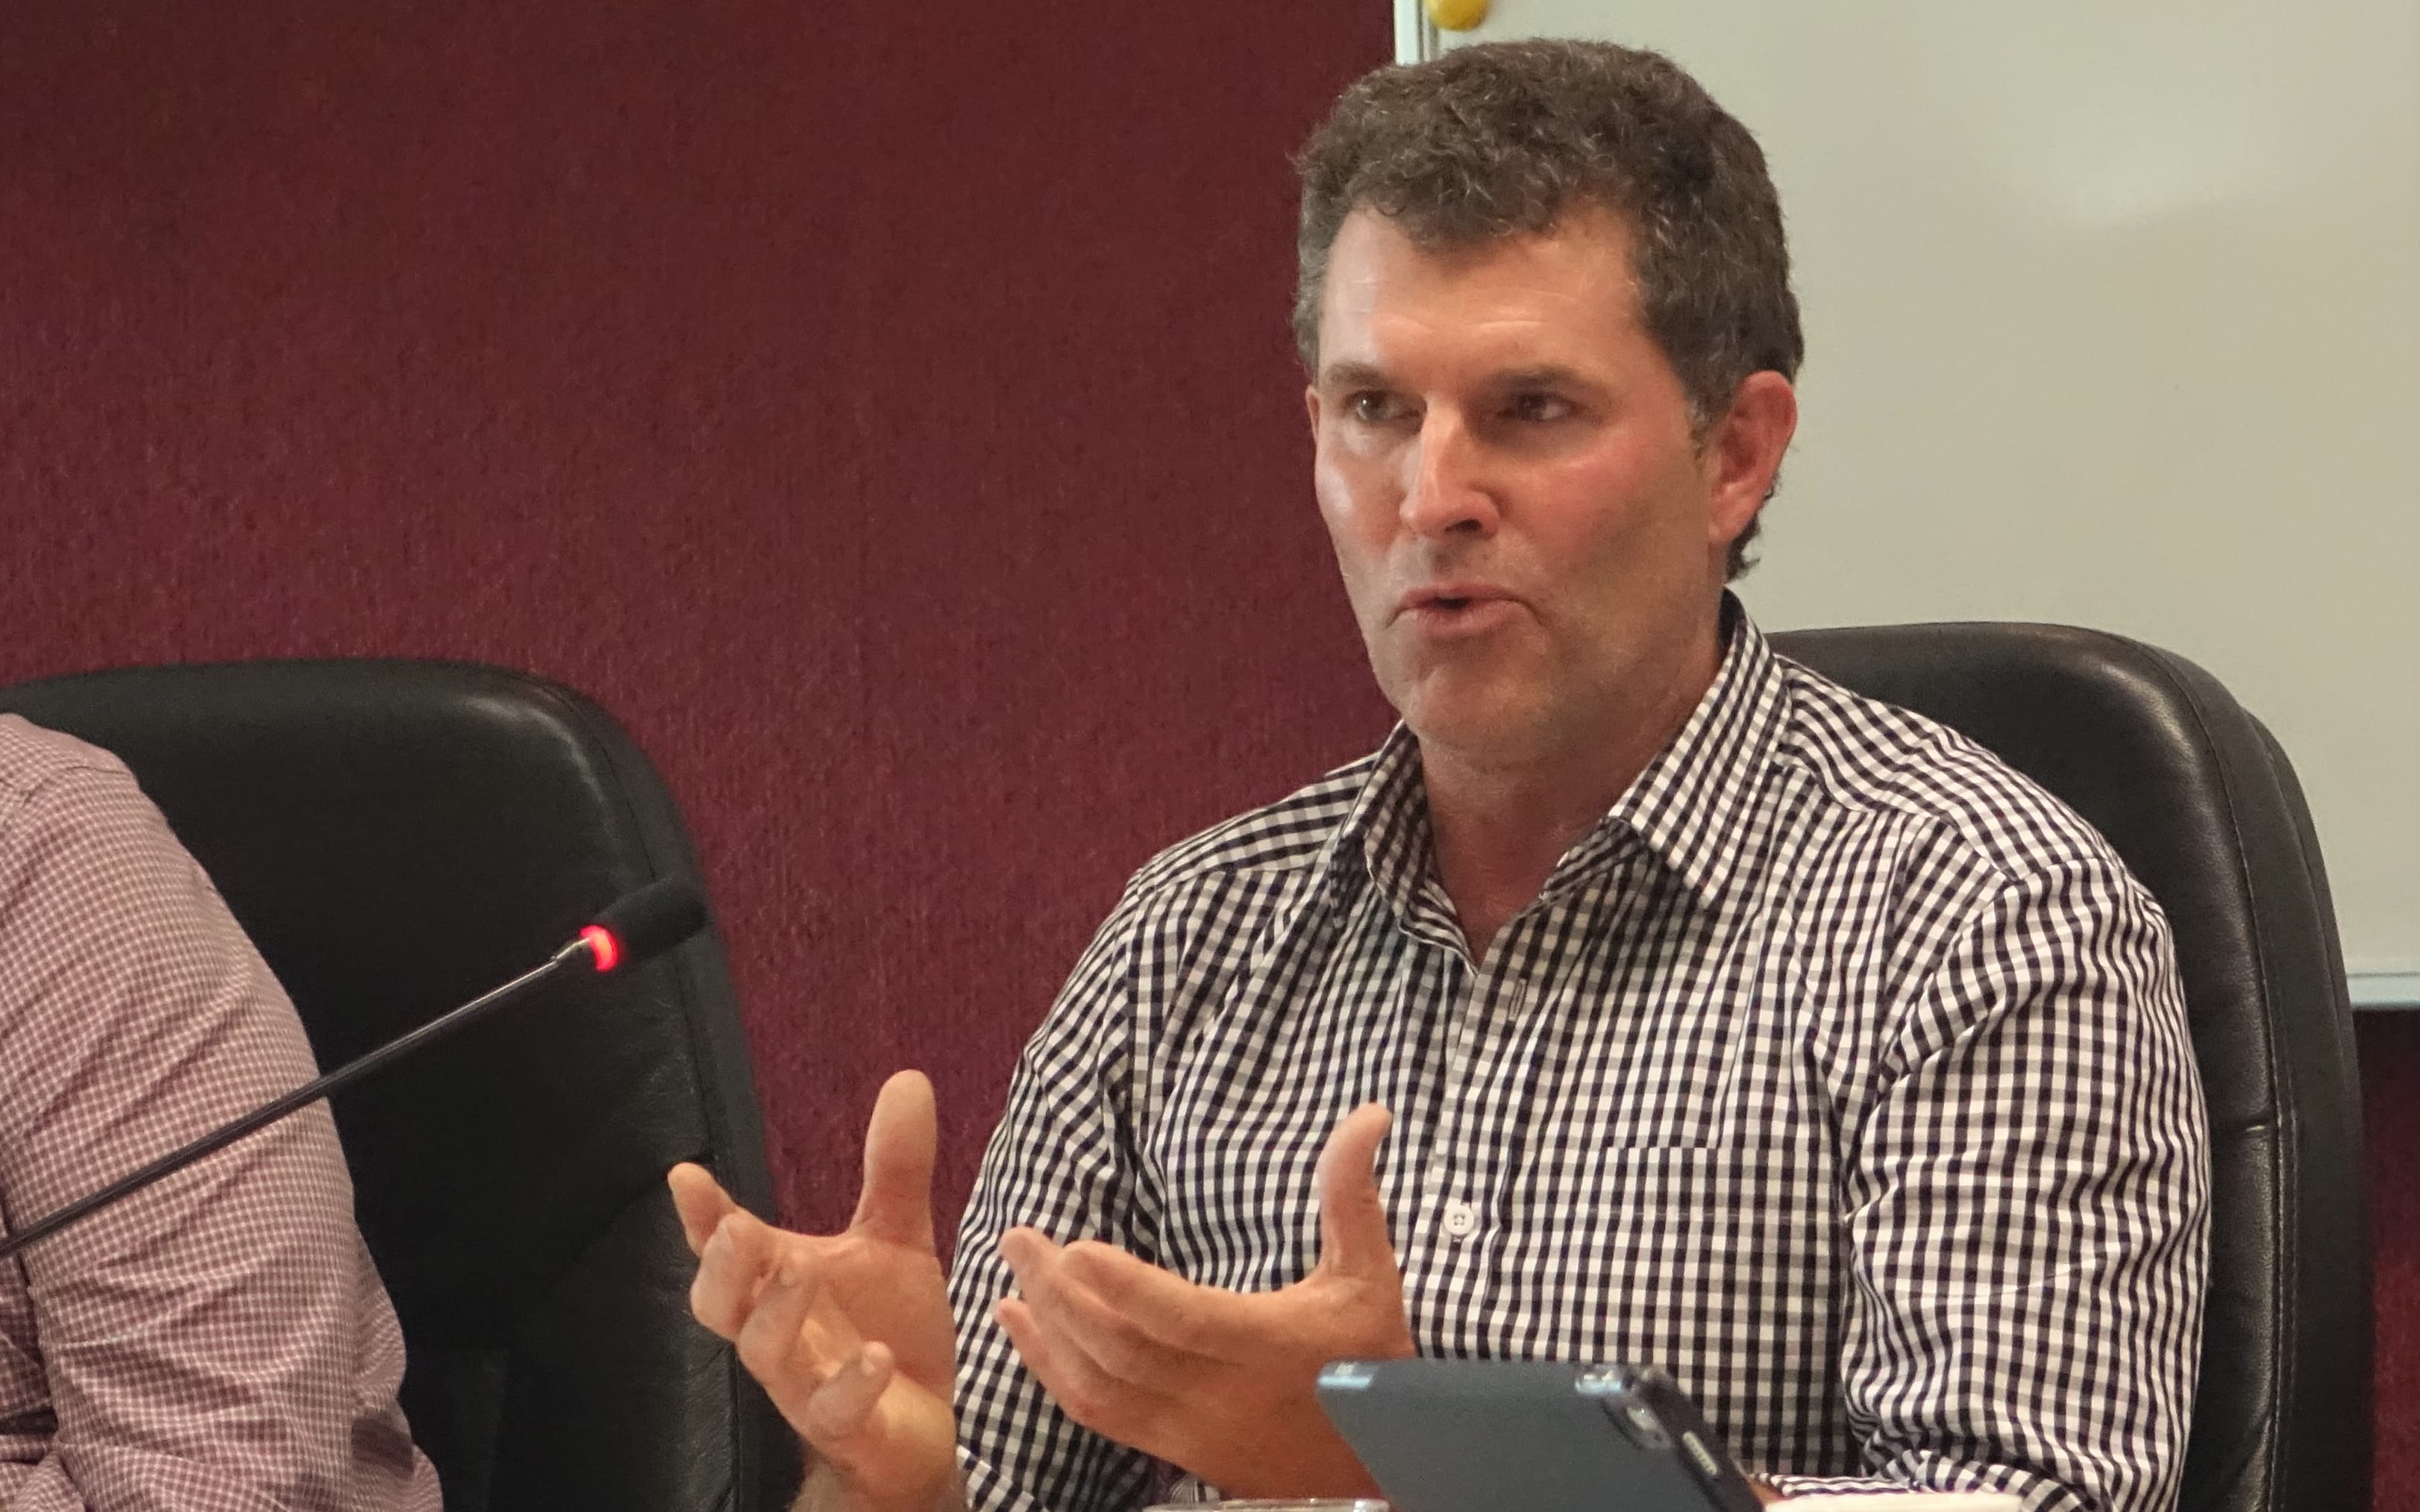 Tasman deputy mayor Tim King